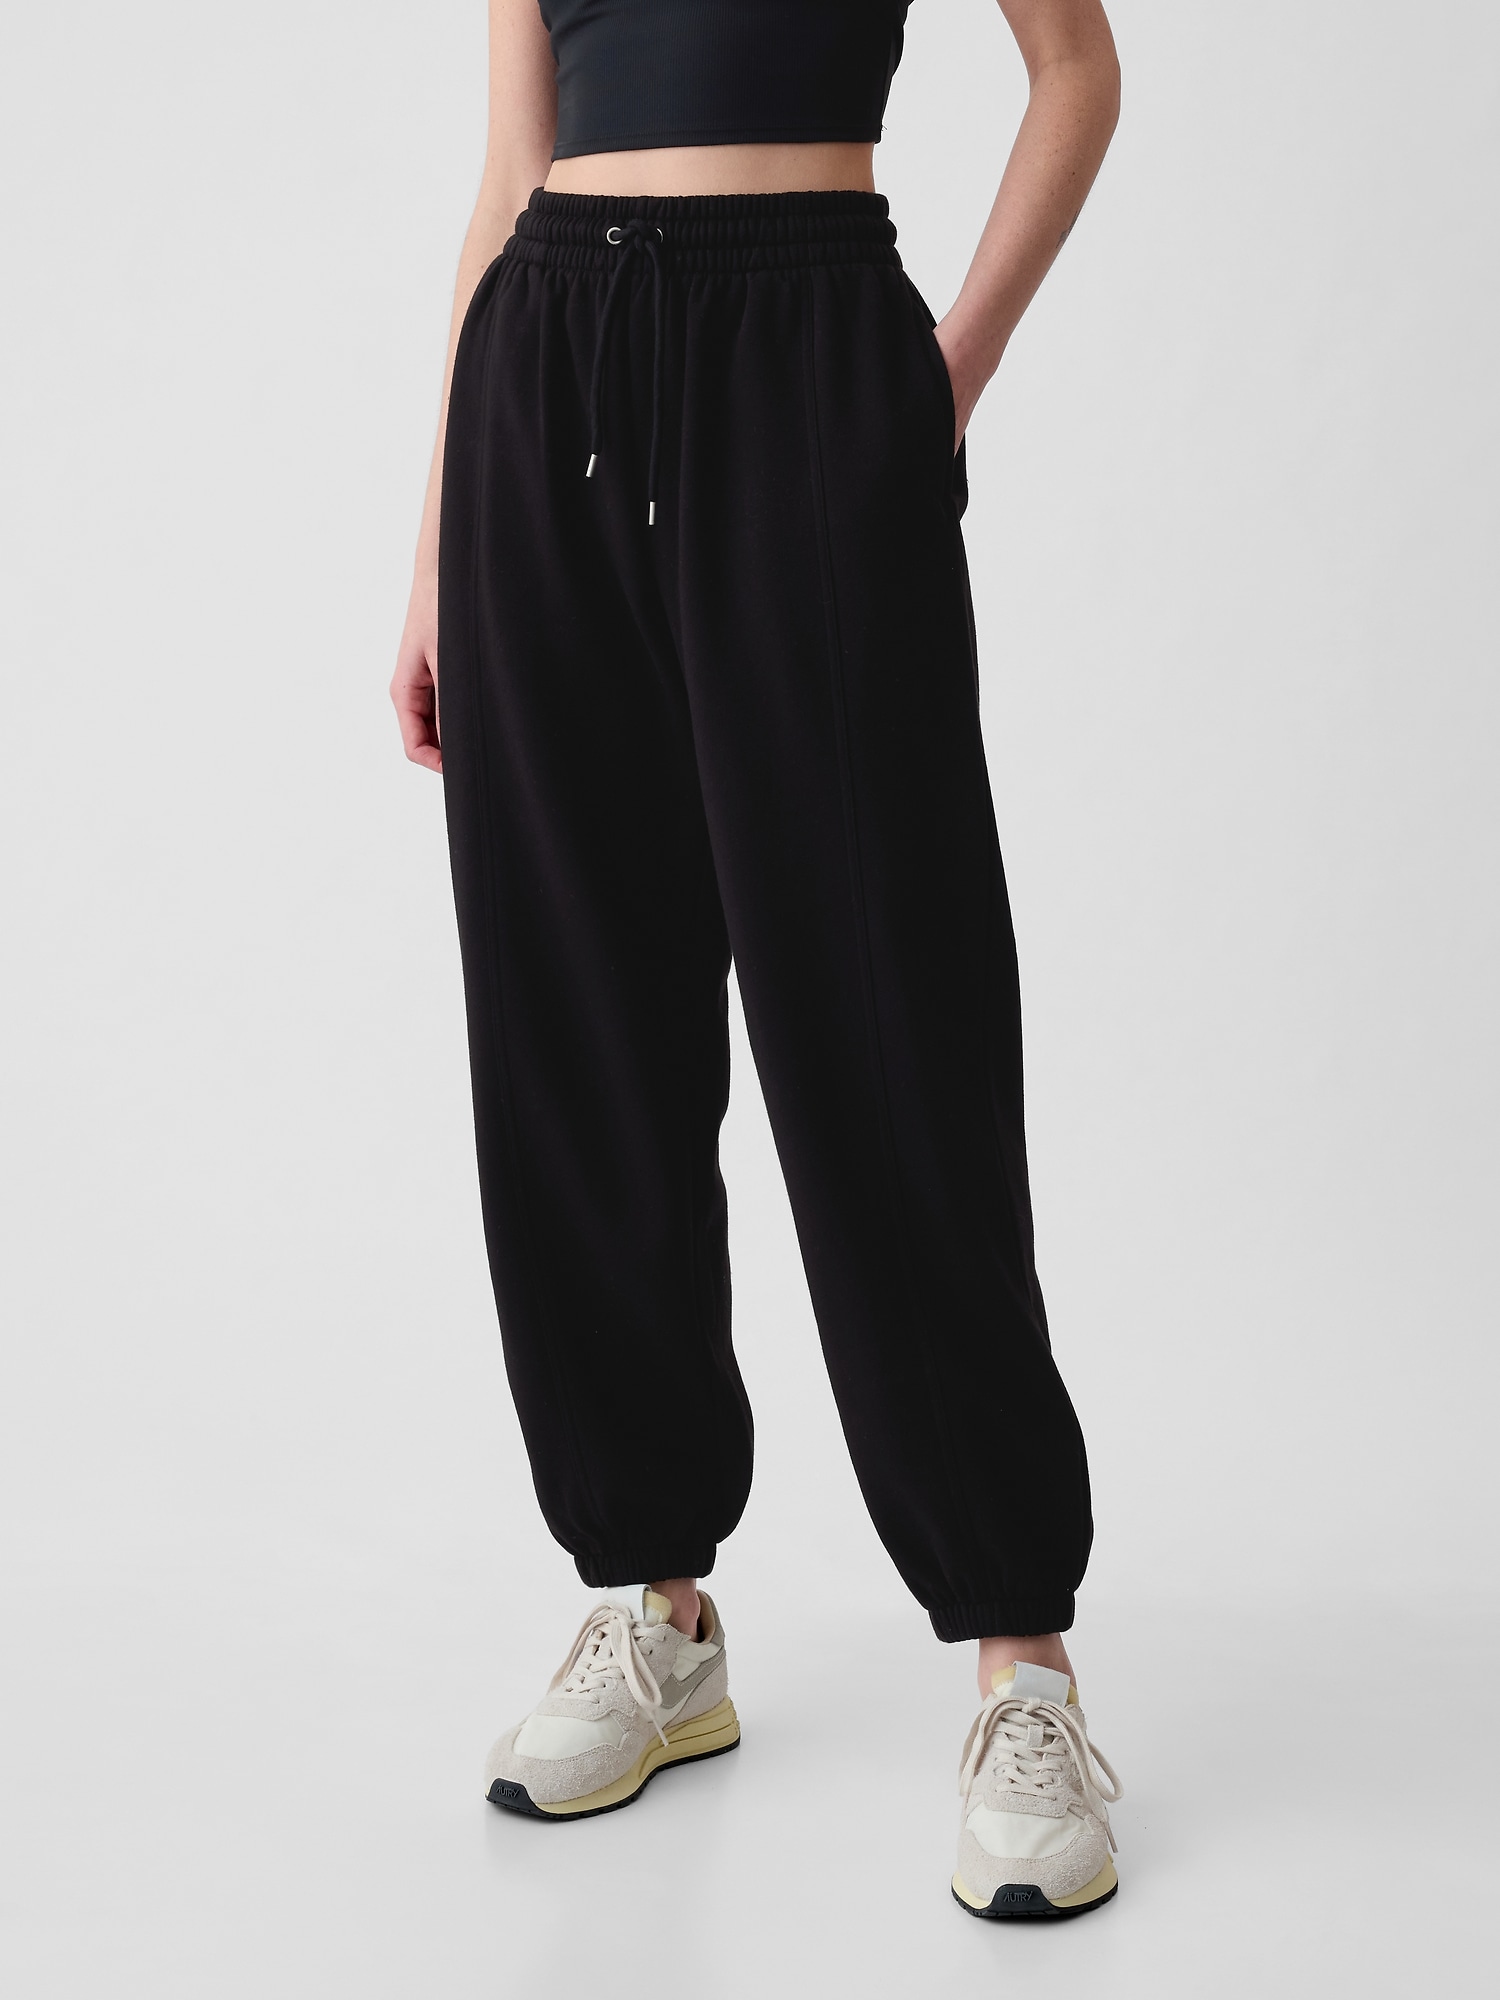 Cotton Fleece Lined Sweatpants for Women with Pockets Drawstring Elastic  Waist Wide Leg Cinch Bottom Jogger Pants (XX-Large, Black) 